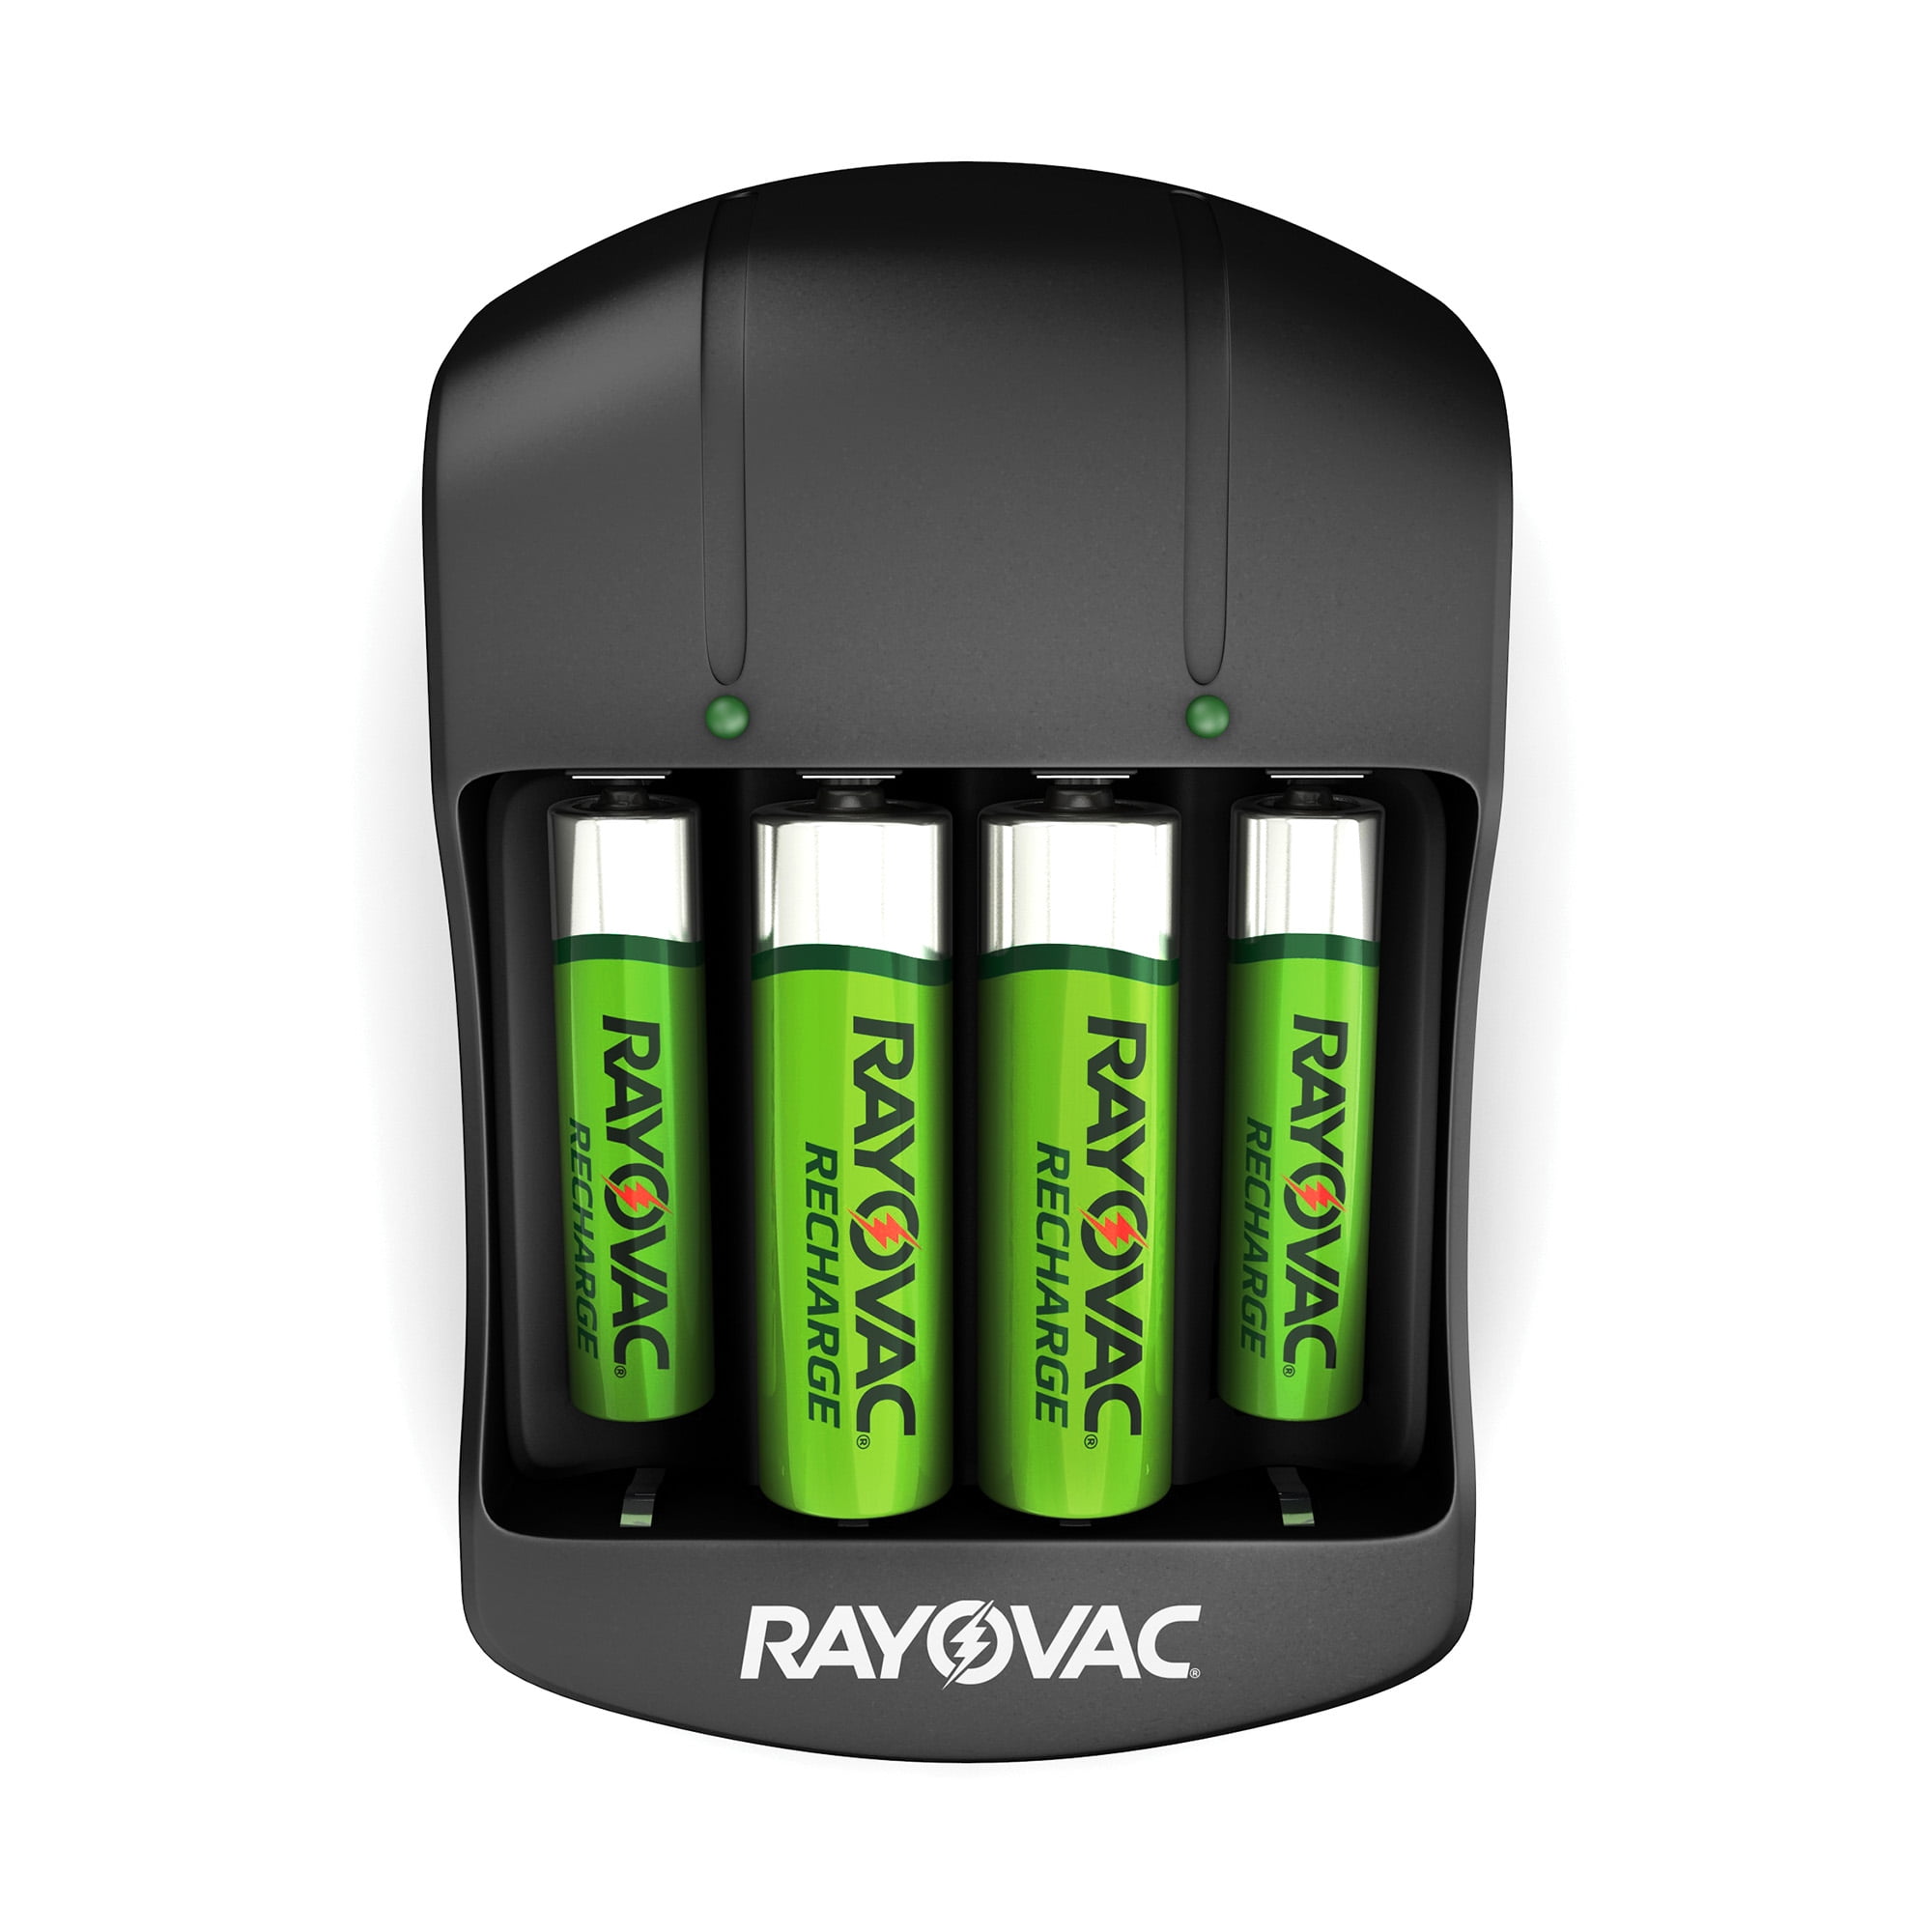 Rayovac AA and AAA Rechargeable Battery Charger, Includes NiMh 2 AA and 2  AAA Rechargeable Batteries